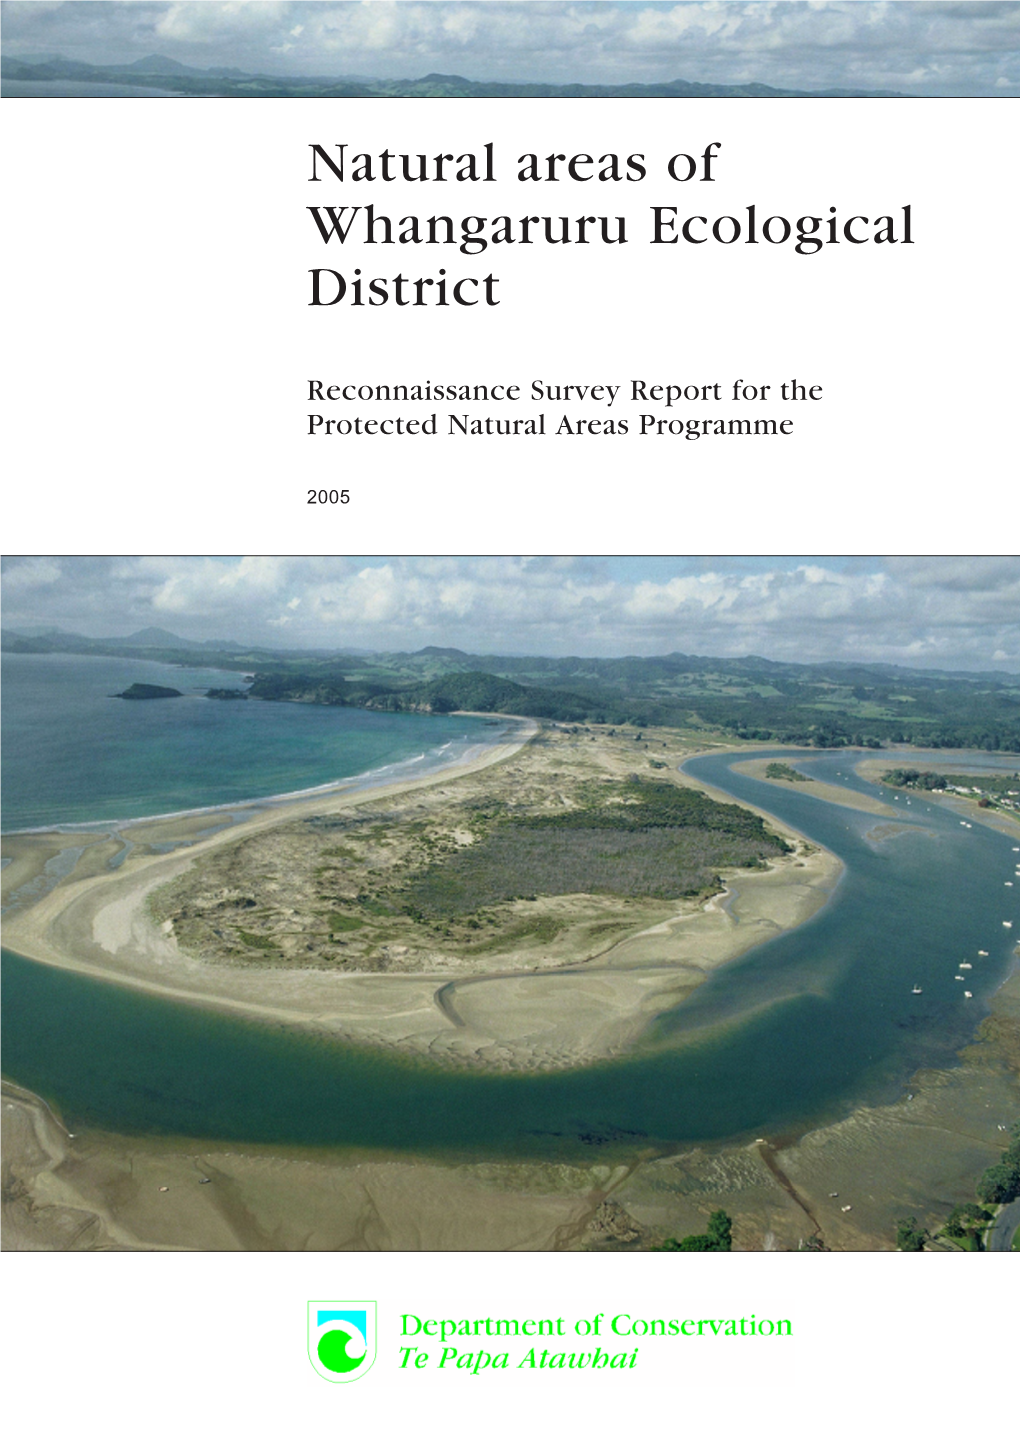 Natural Areas of Whangaruru Ecological District